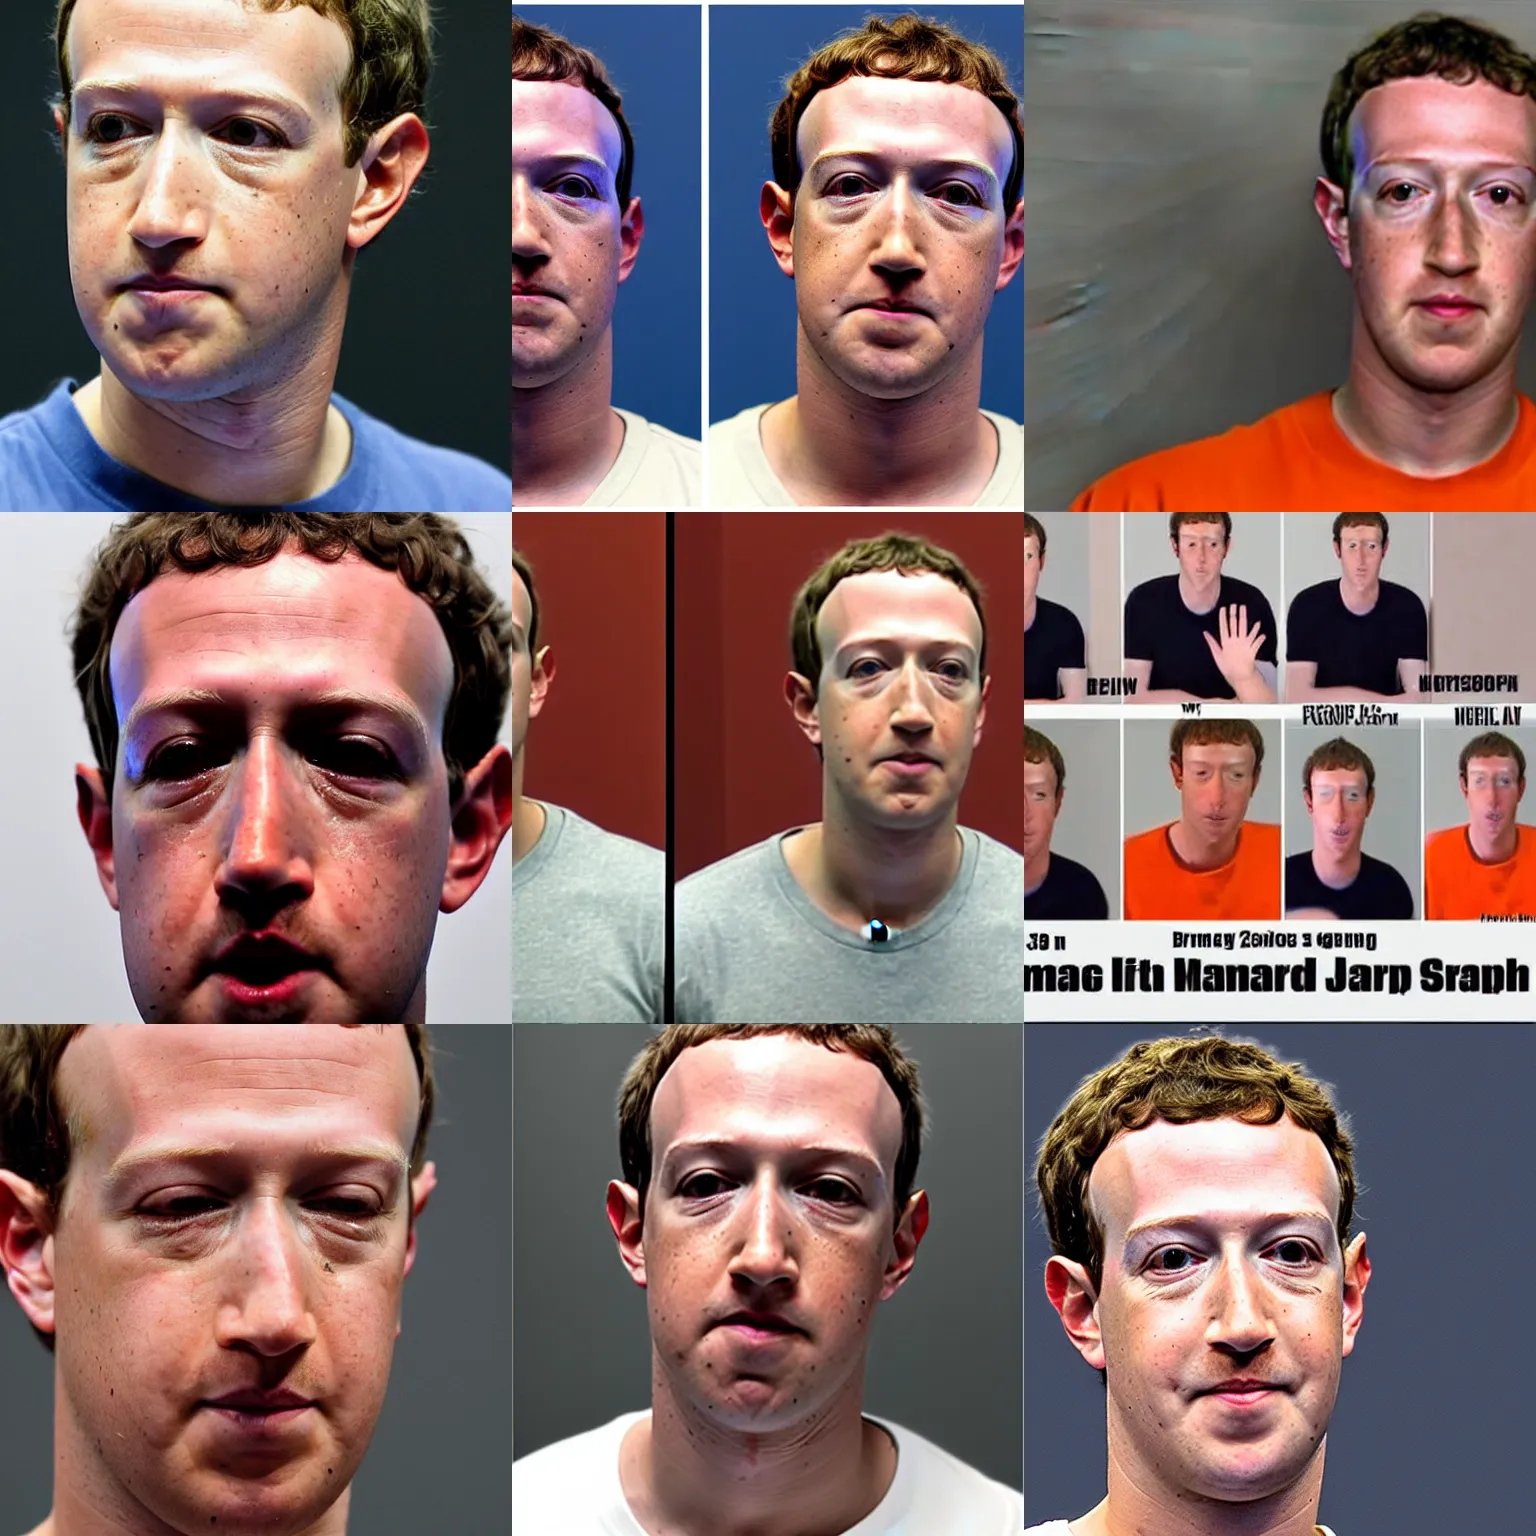 Prompt: Mark Zuckerberg crying in mugshot, wearing orange jumpsuit